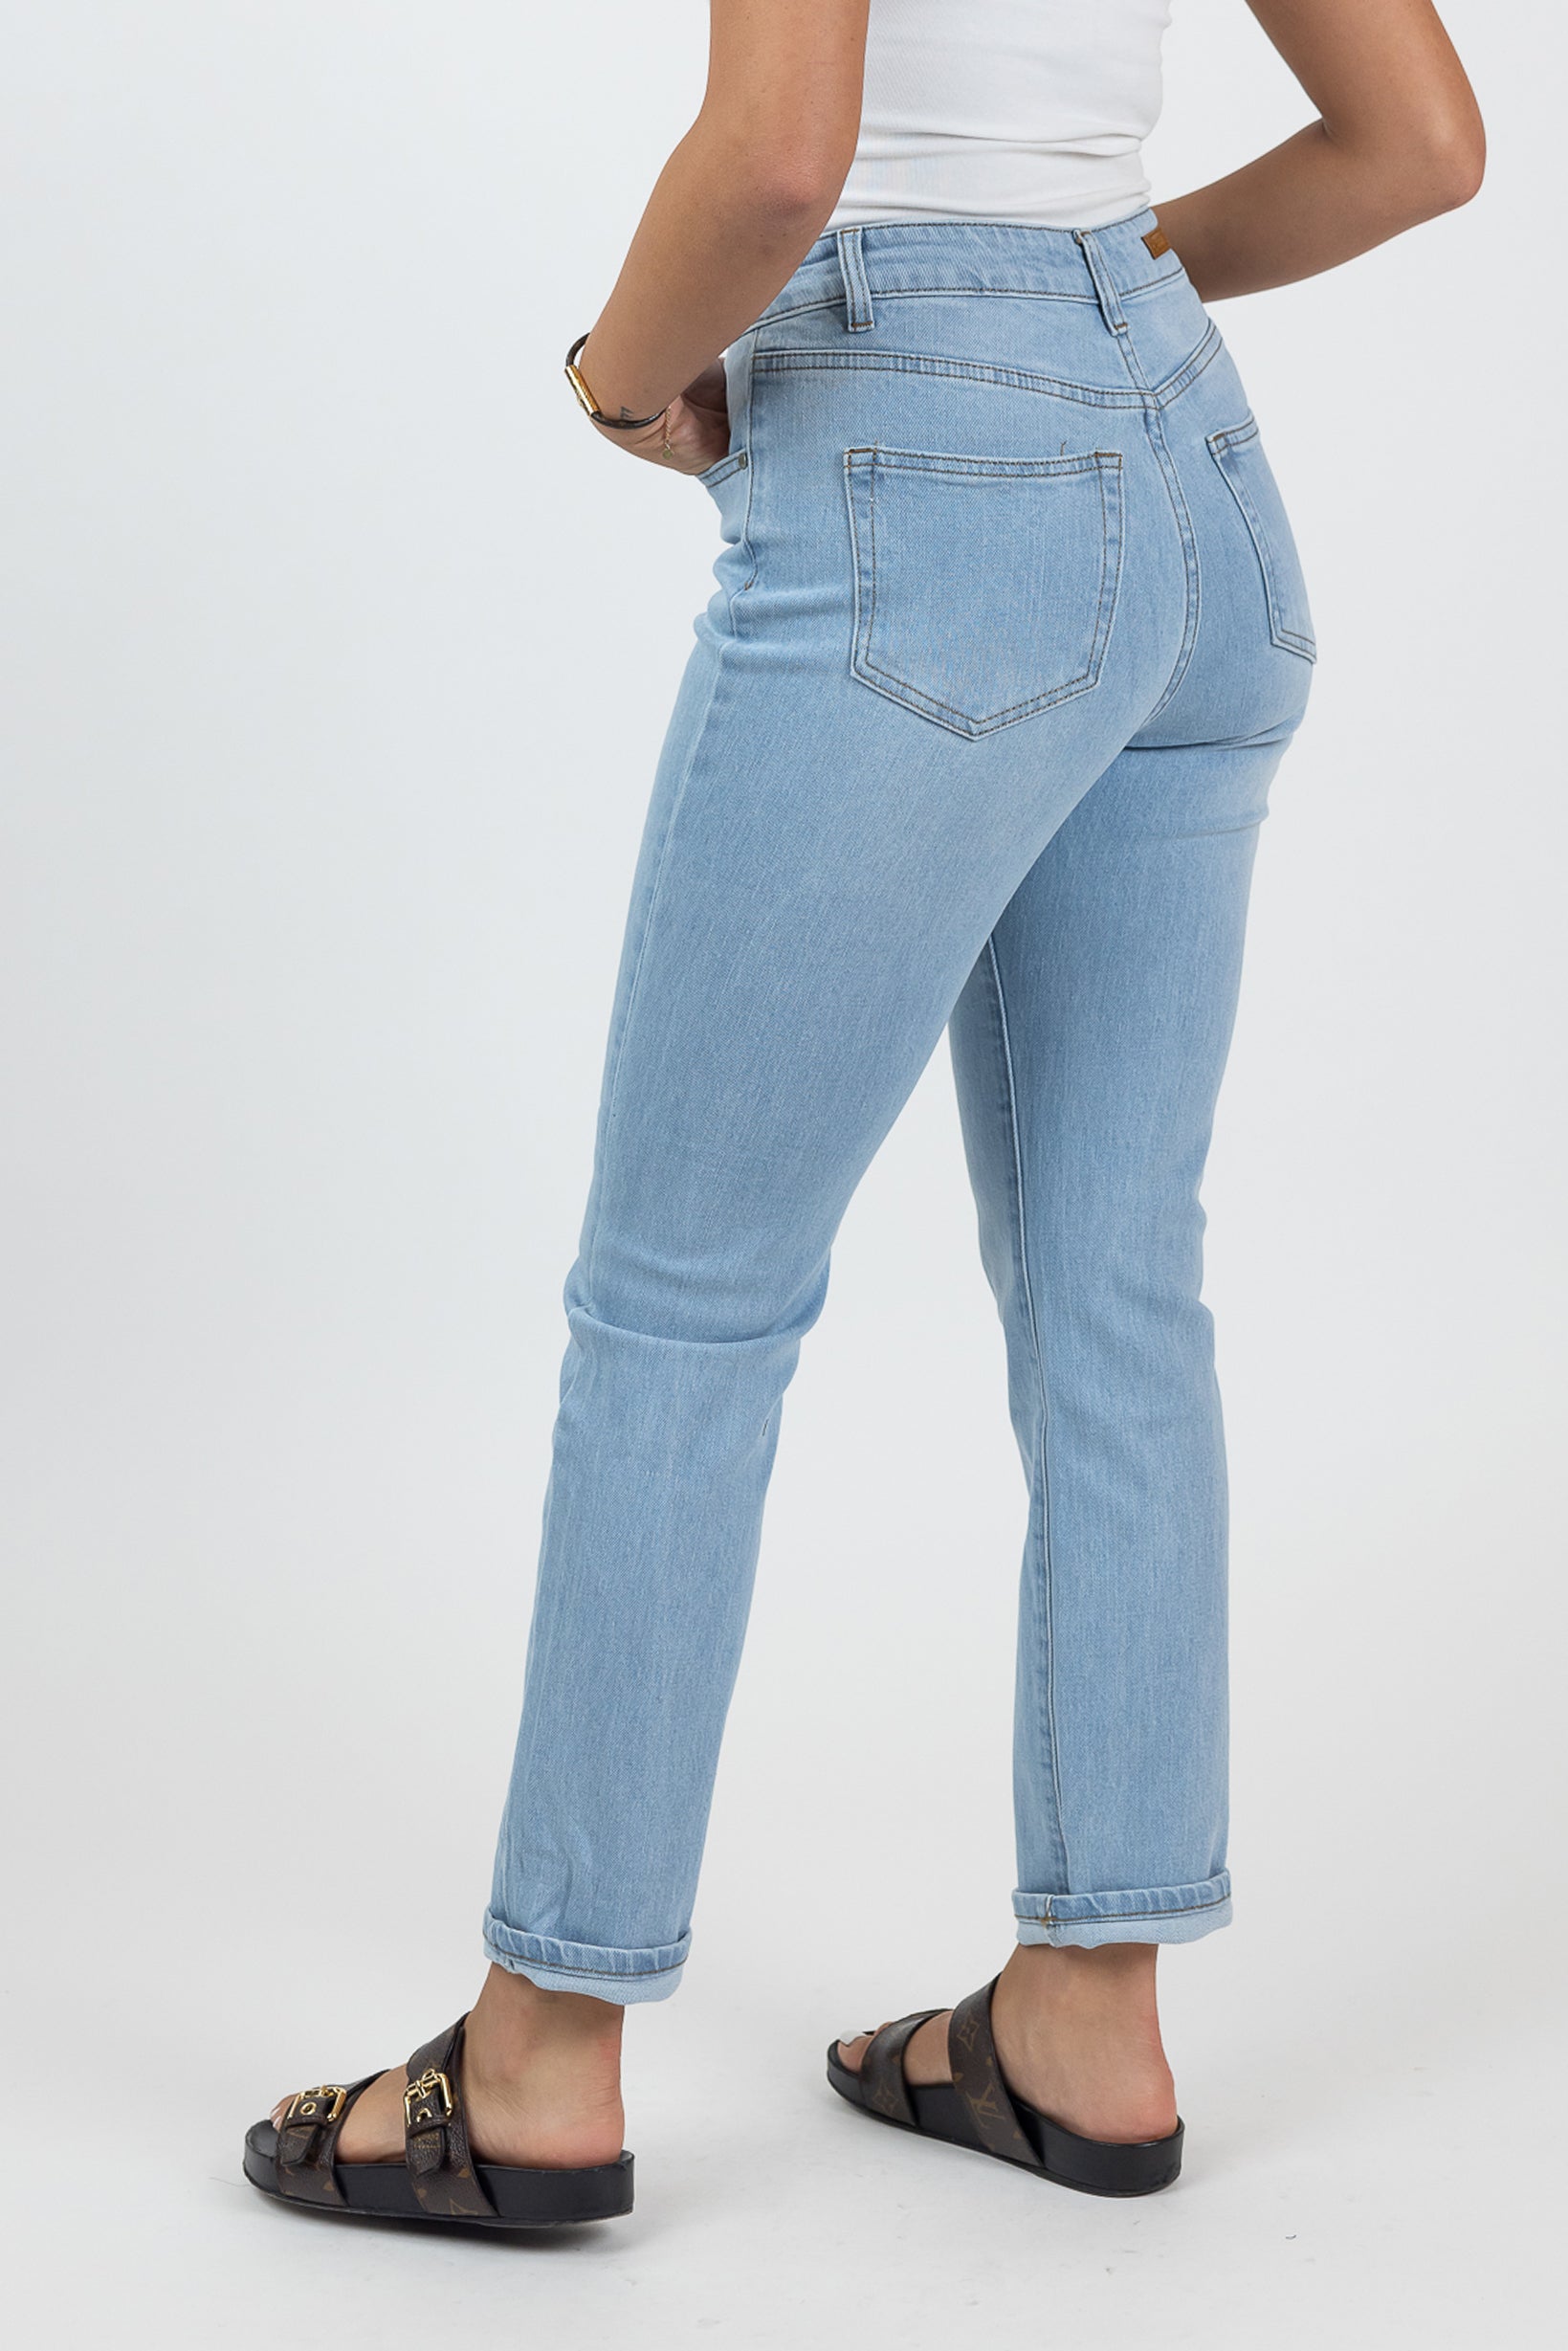 CGJ1646-denim-jeans